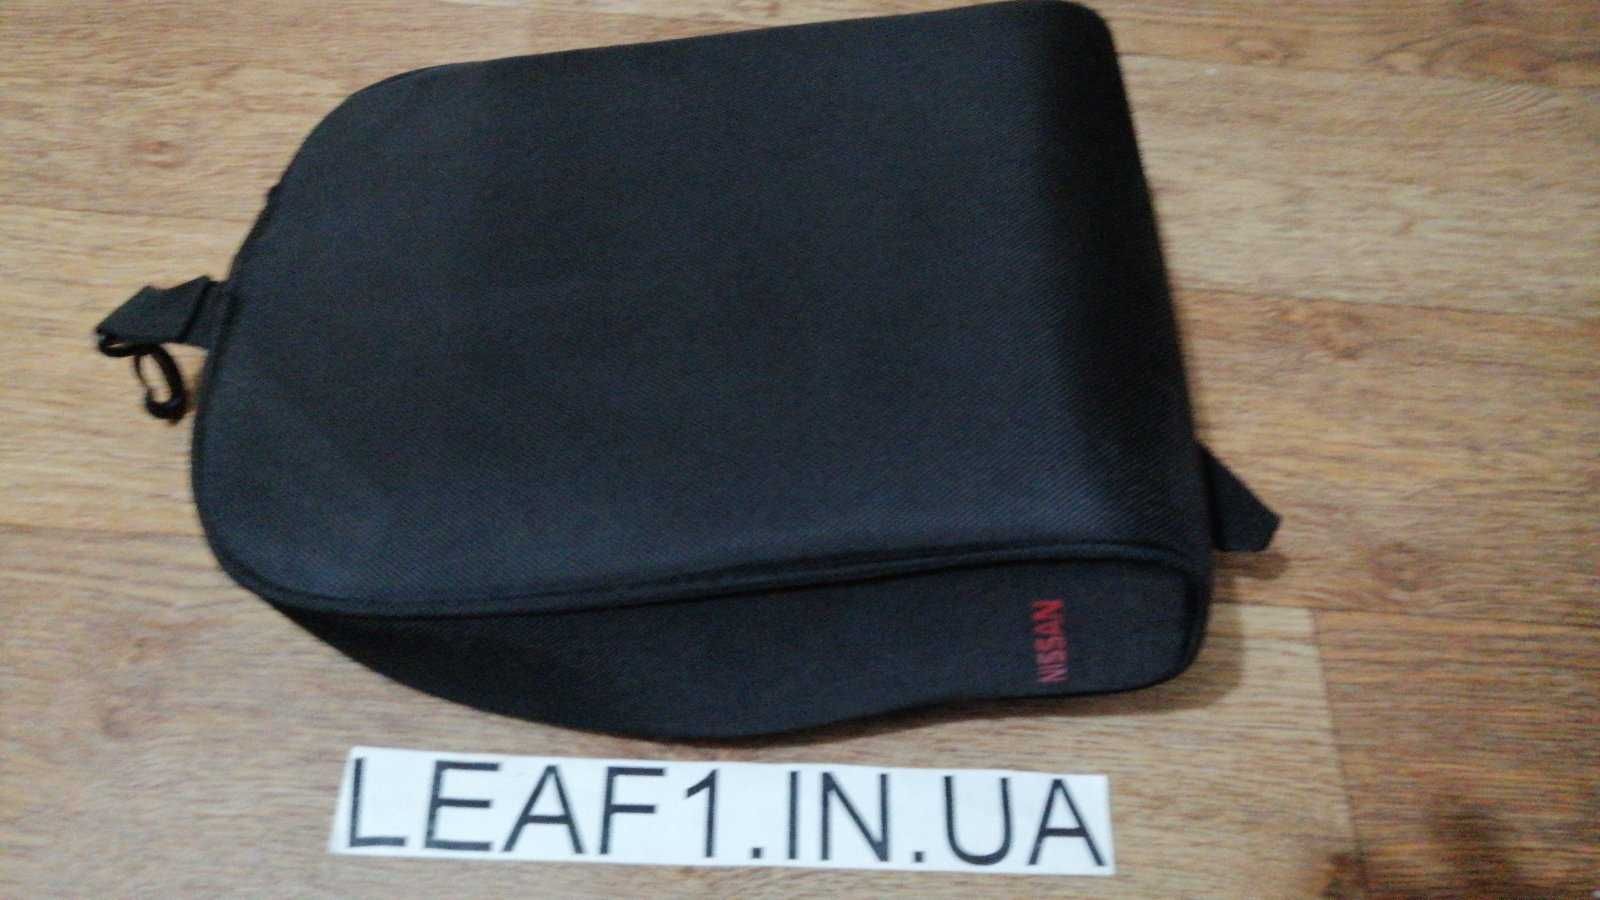 сумка оригинал nissan zero emision черная leaf на молнии ручка сверху